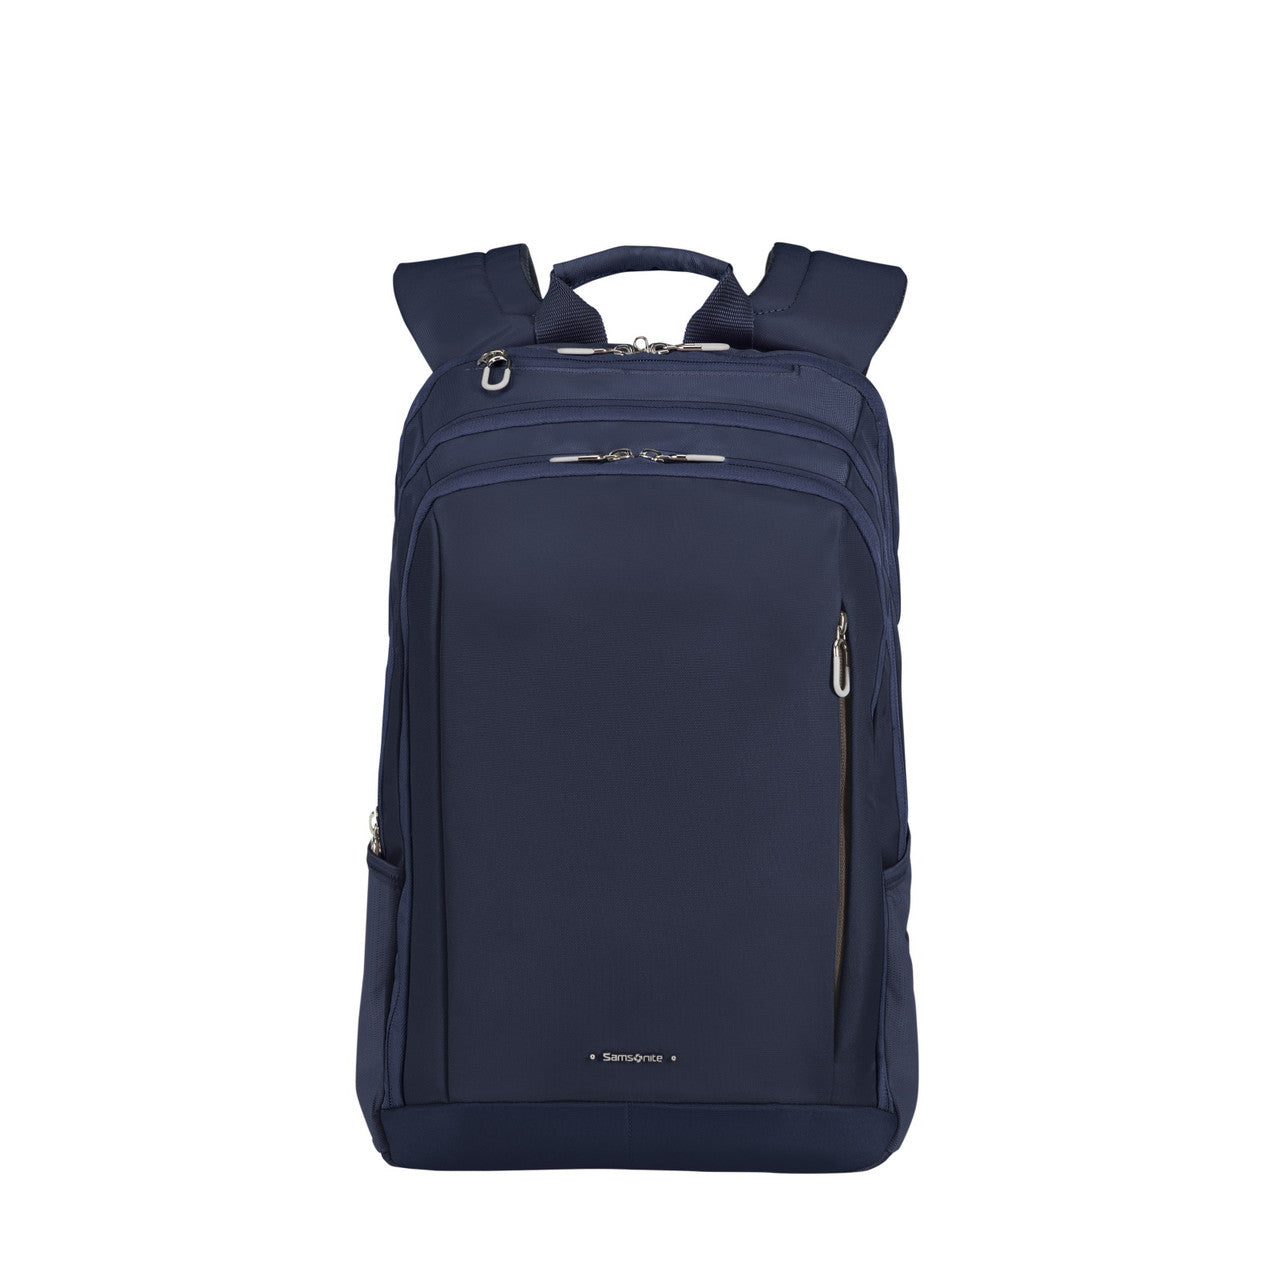 Samsonite - GUARDIT CLASSY 15.6in Backpack - MIDNIGHT BLUE